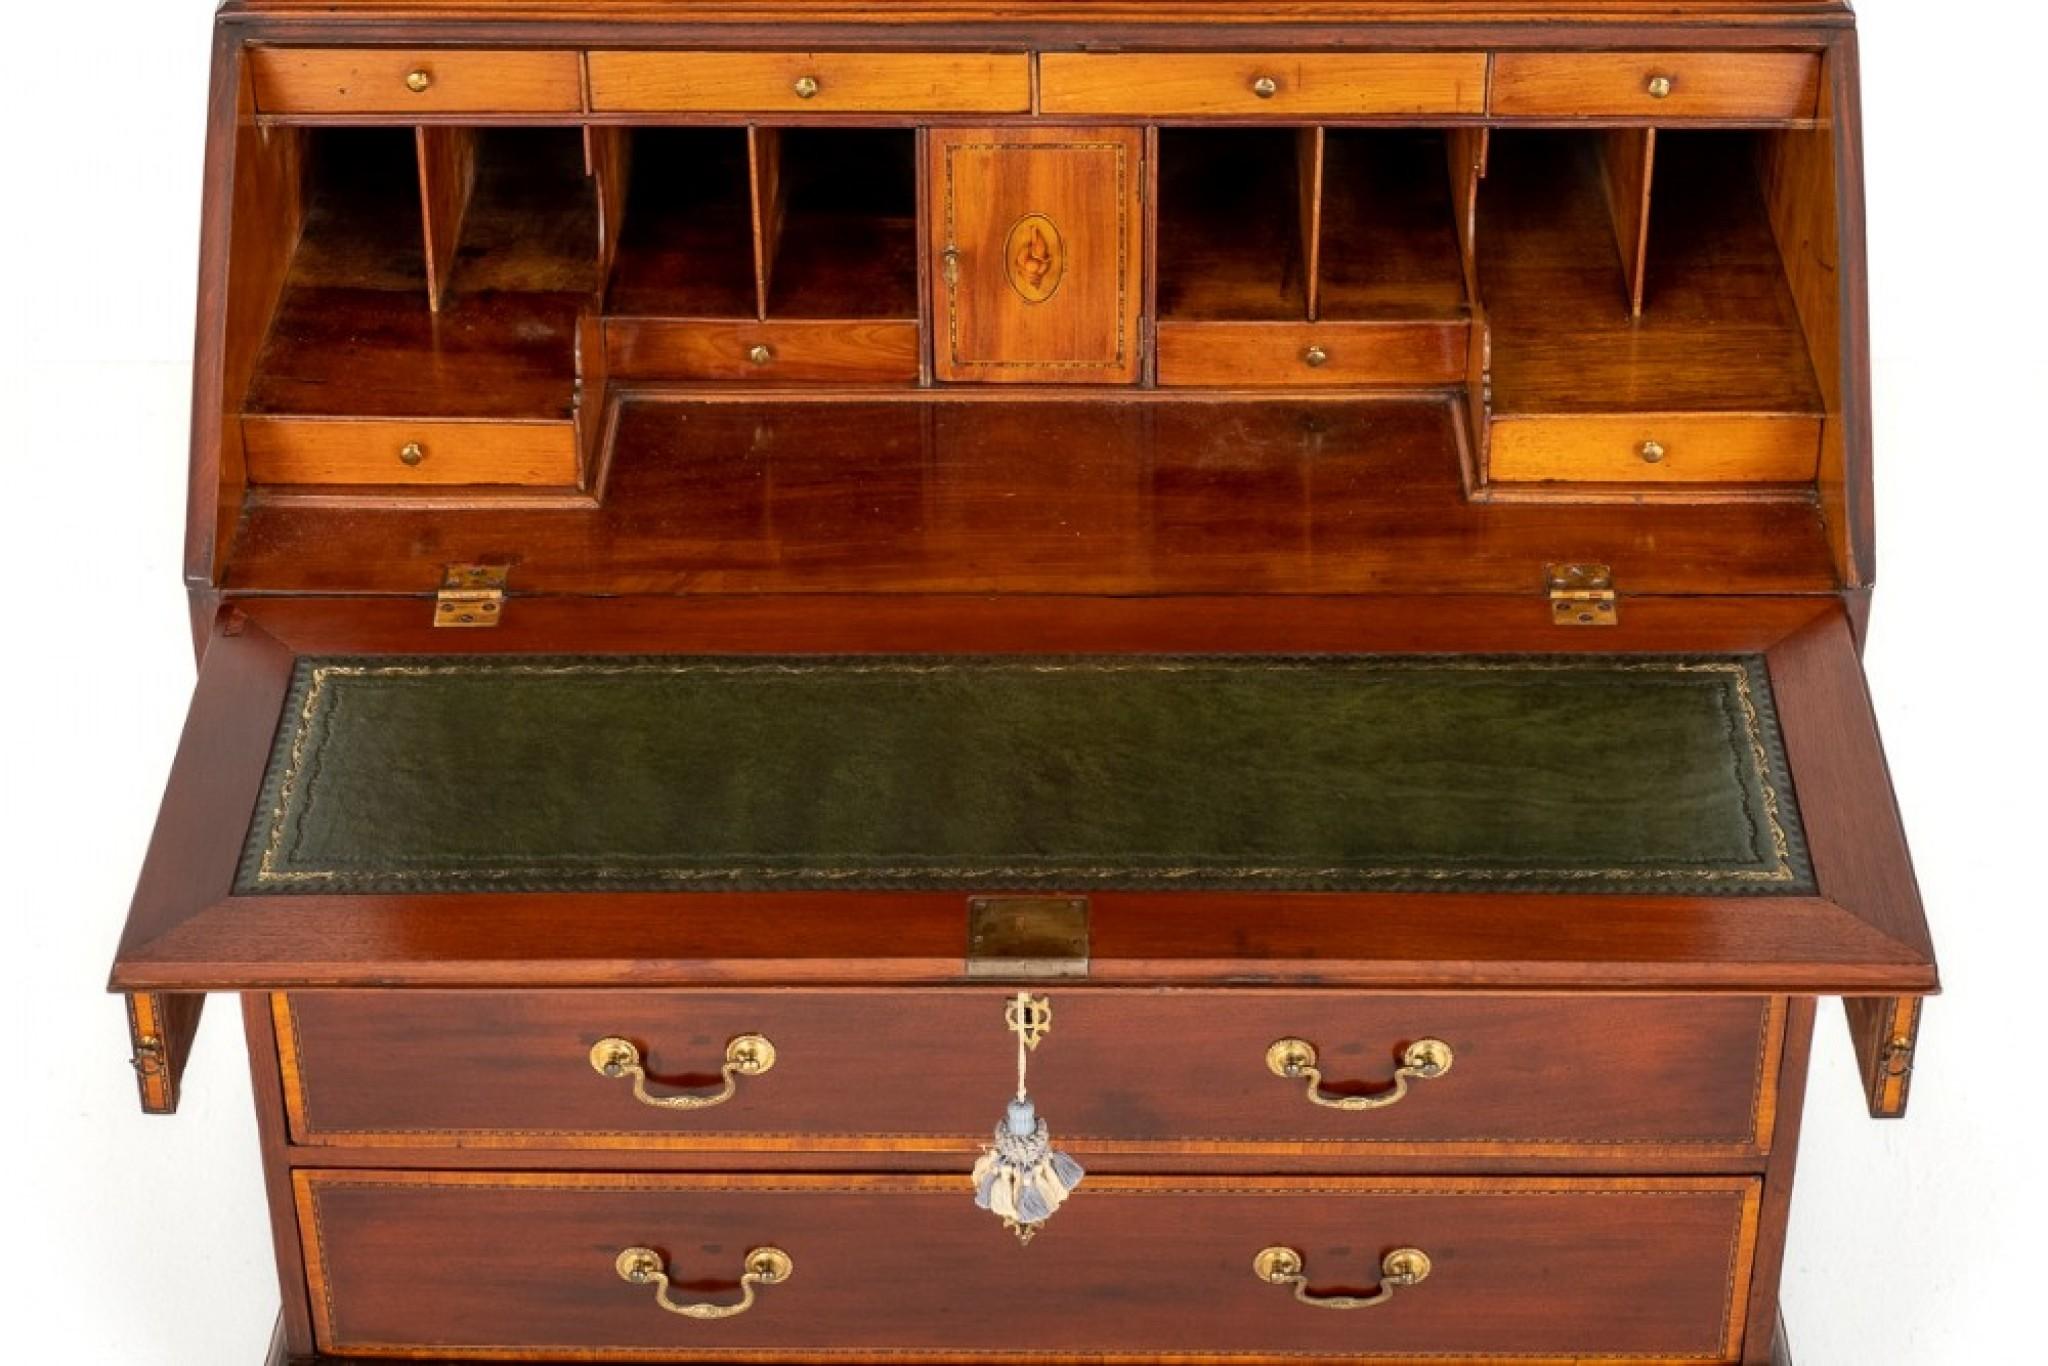 Georgian Bureau Bookcase Period Mahogany Desk In Good Condition For Sale In Potters Bar, GB